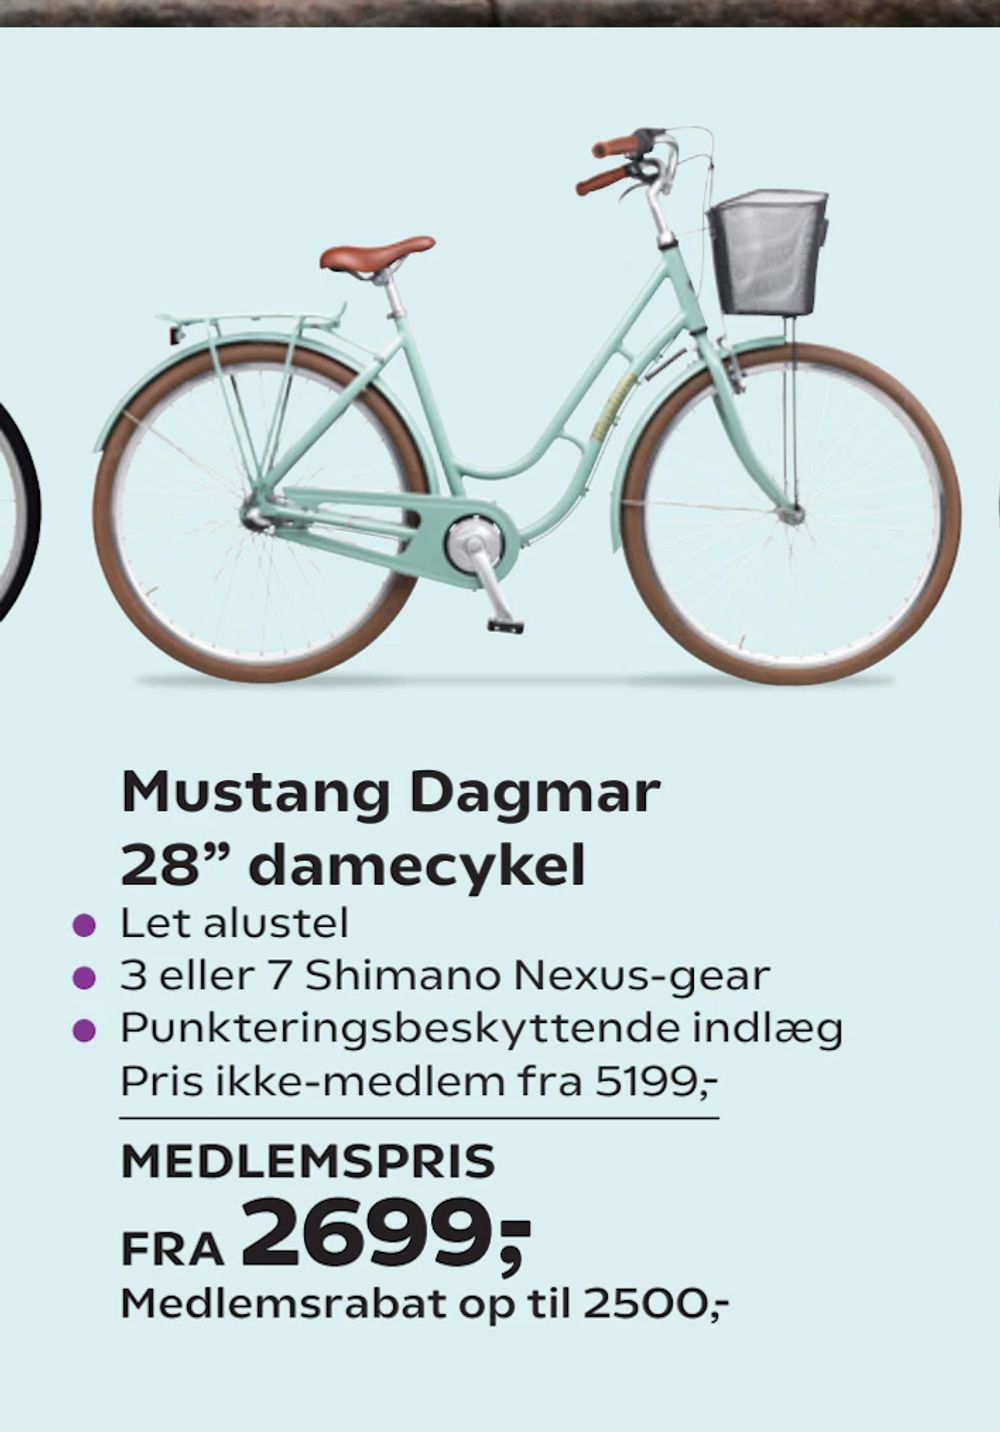 Tilbud på Mustang Dagmar 28” damecykel fra Coop.dk til 2.699 kr.